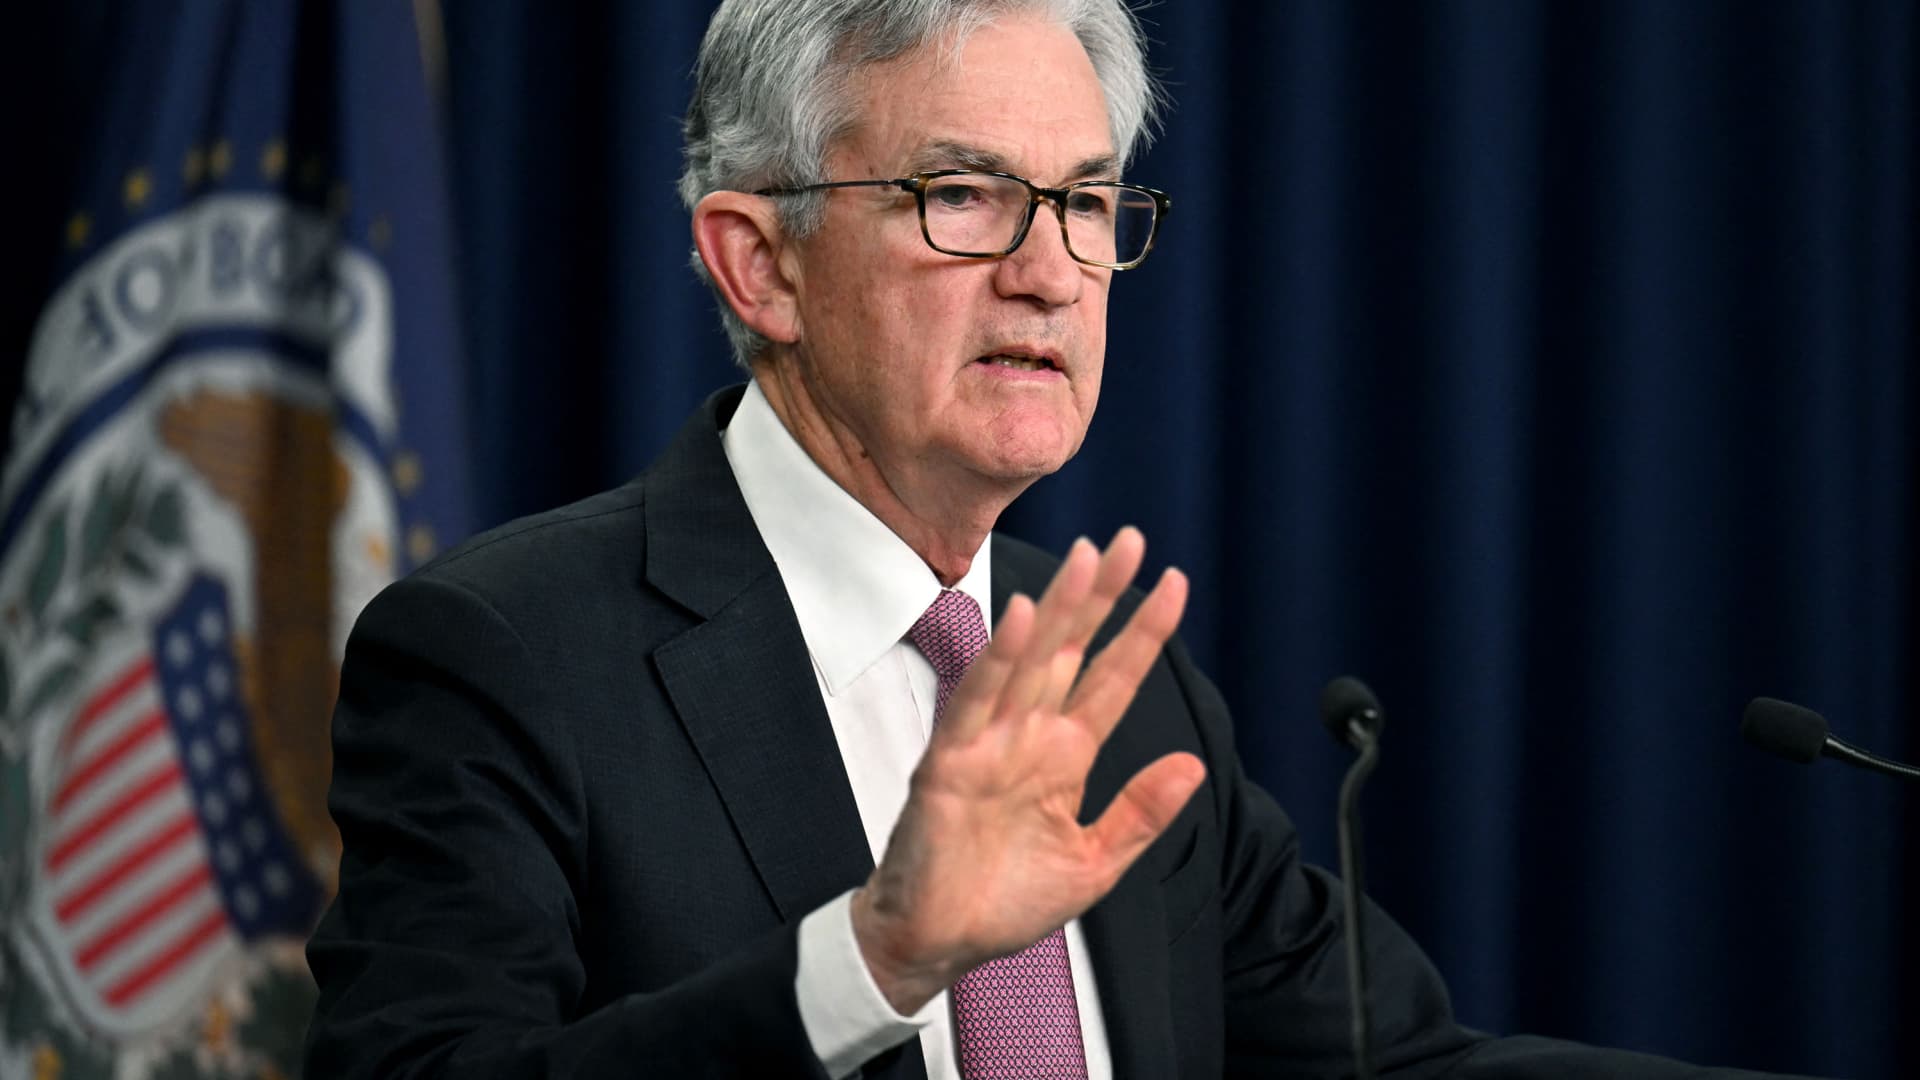 U.S. shares rallied regardless of Fed Chair Powell’s speech